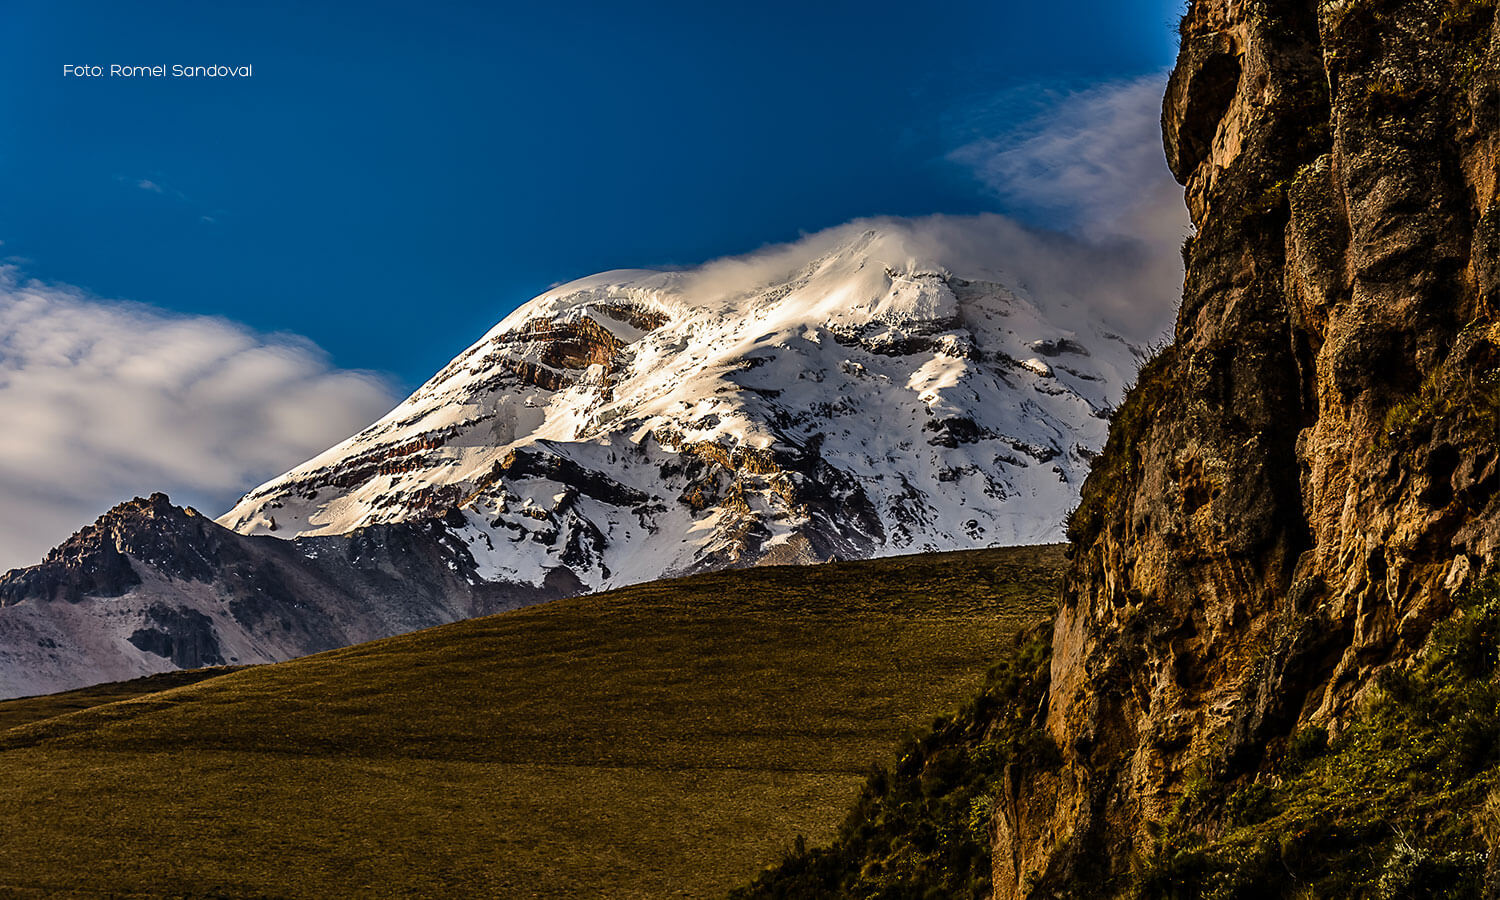 Condortrekk Expeditions Tour operador Chimborazo cover